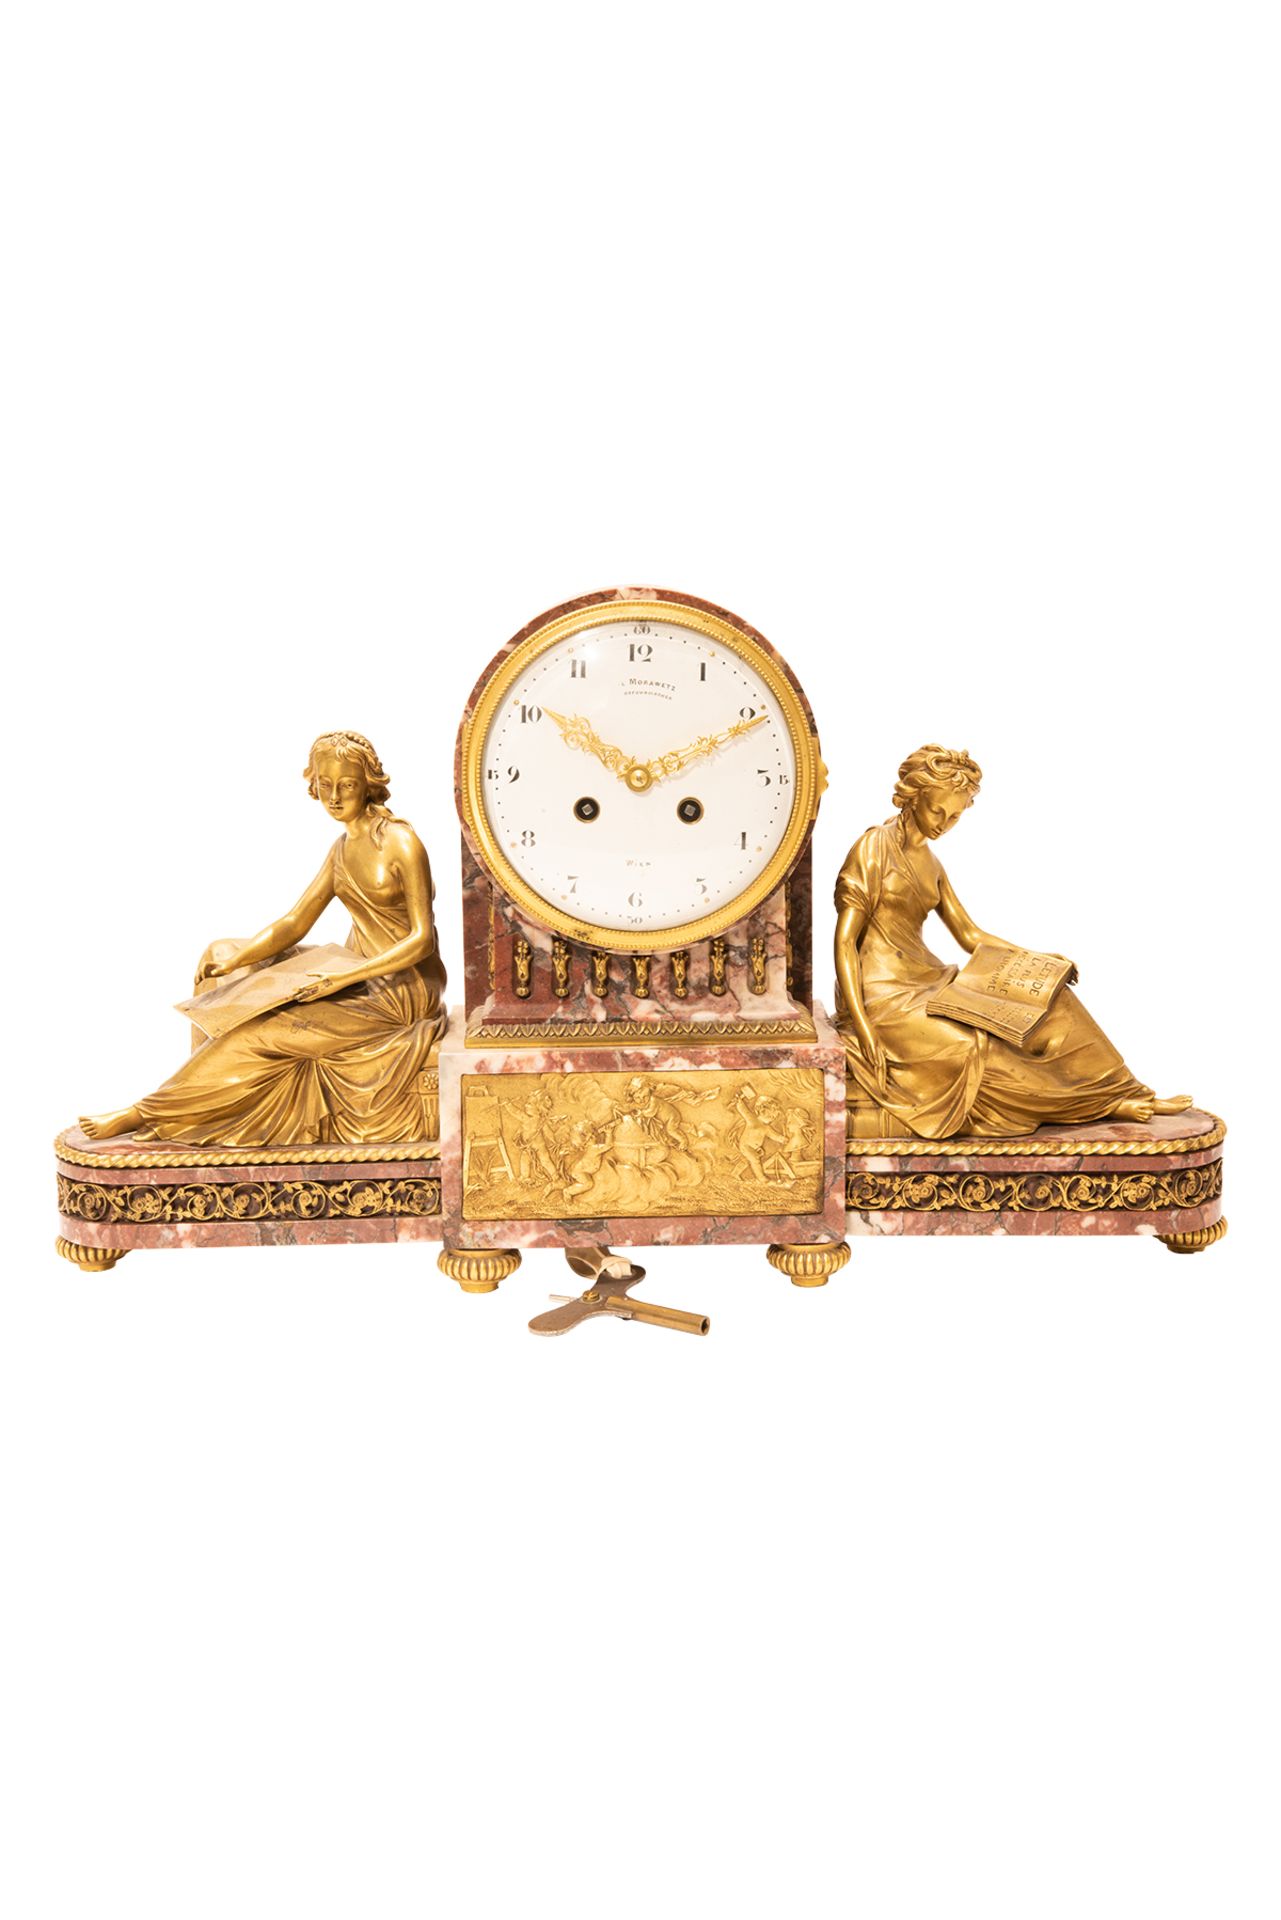 Franz Morawetz 1872-1924, Mantel clock